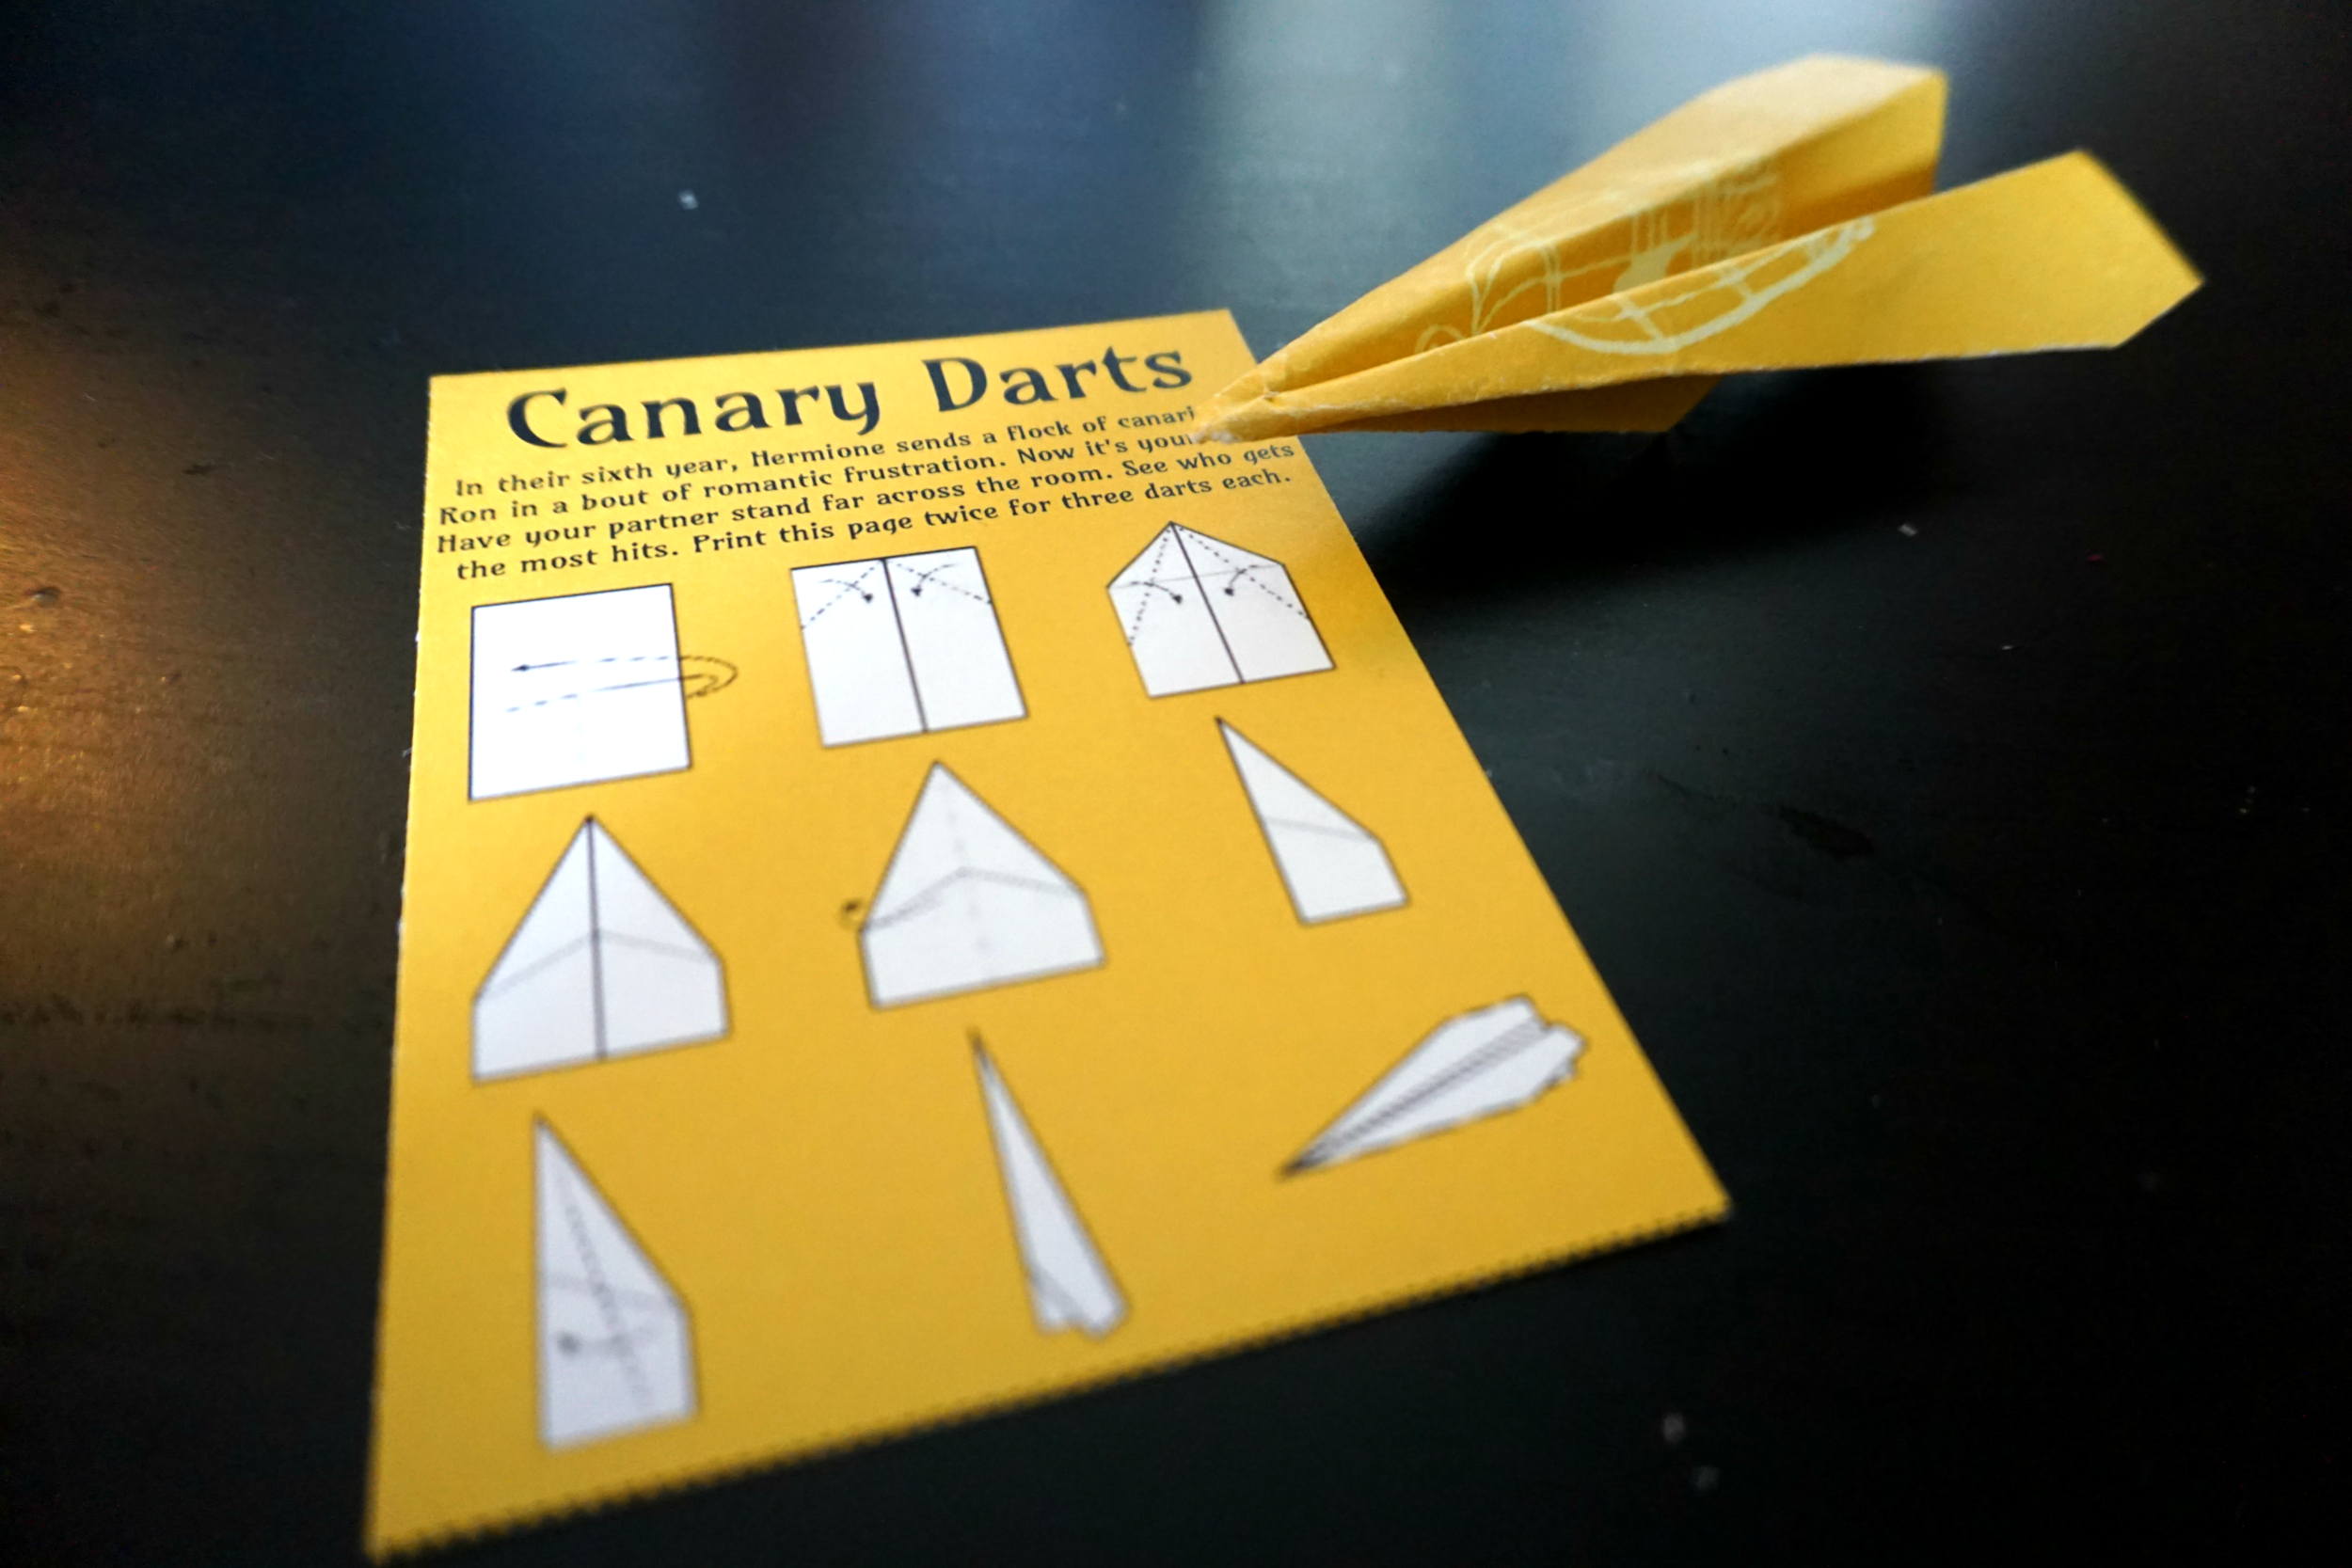 Canary Darts 1 Edit.png